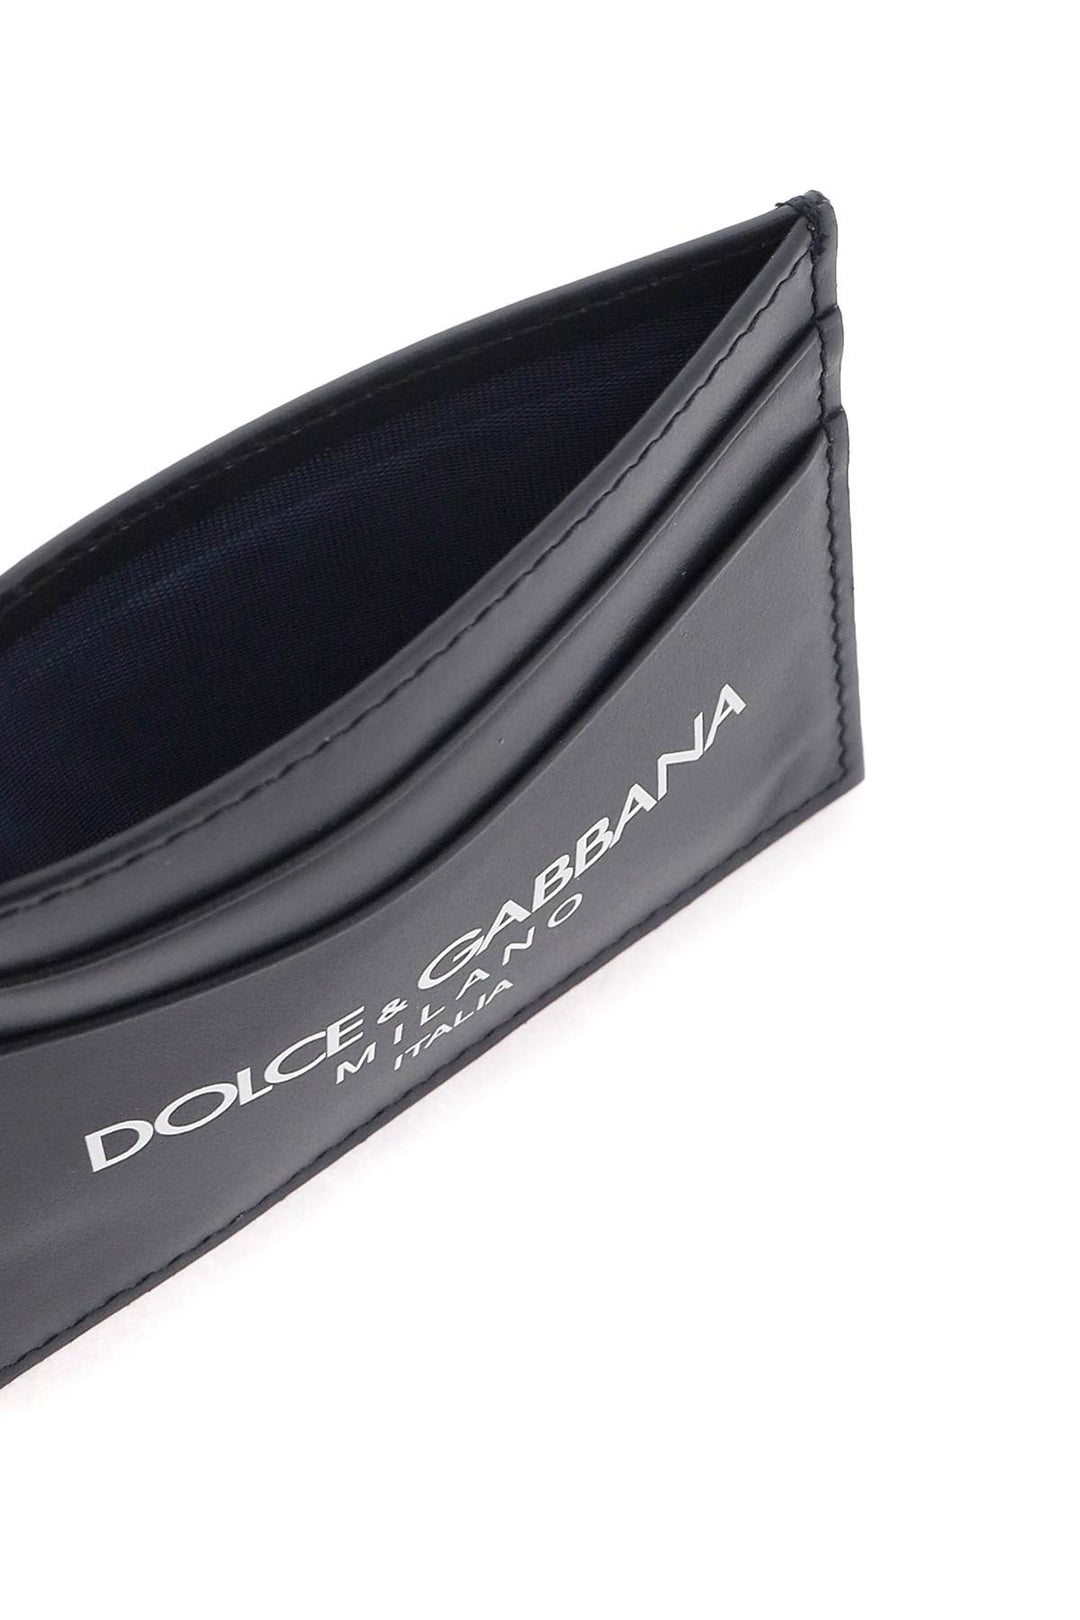 Dolce & Gabbana Logo Leather Cardholder   Blu